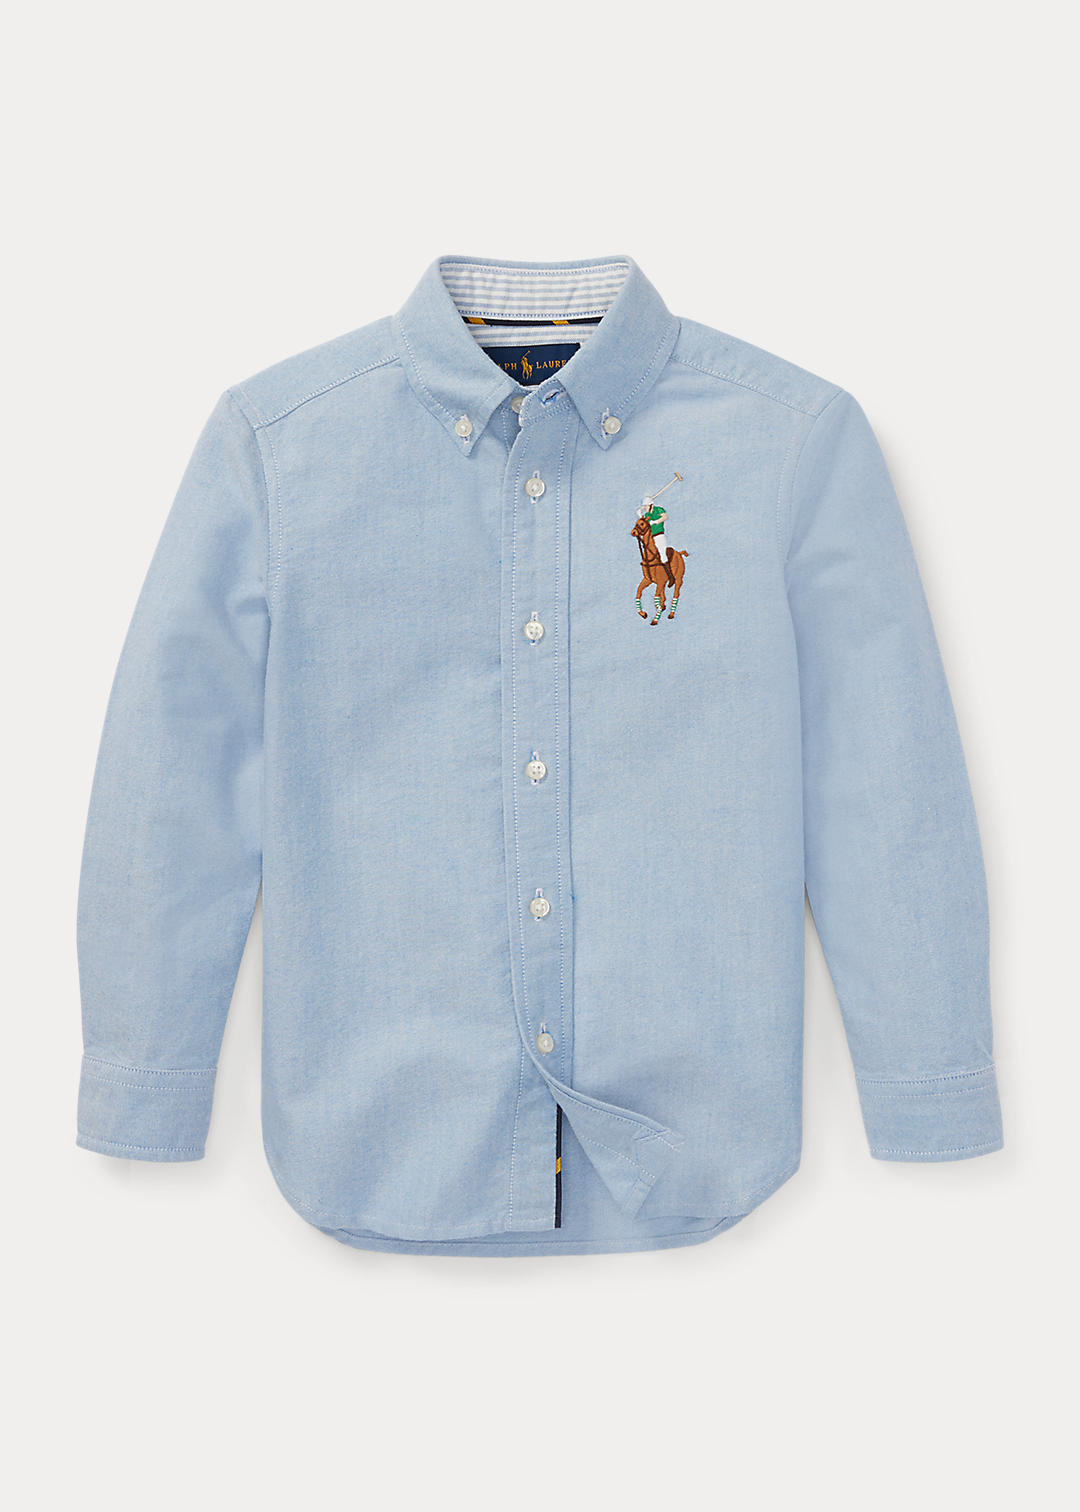 Boys 2-7 Big Pony Cotton Oxford Shirt 1